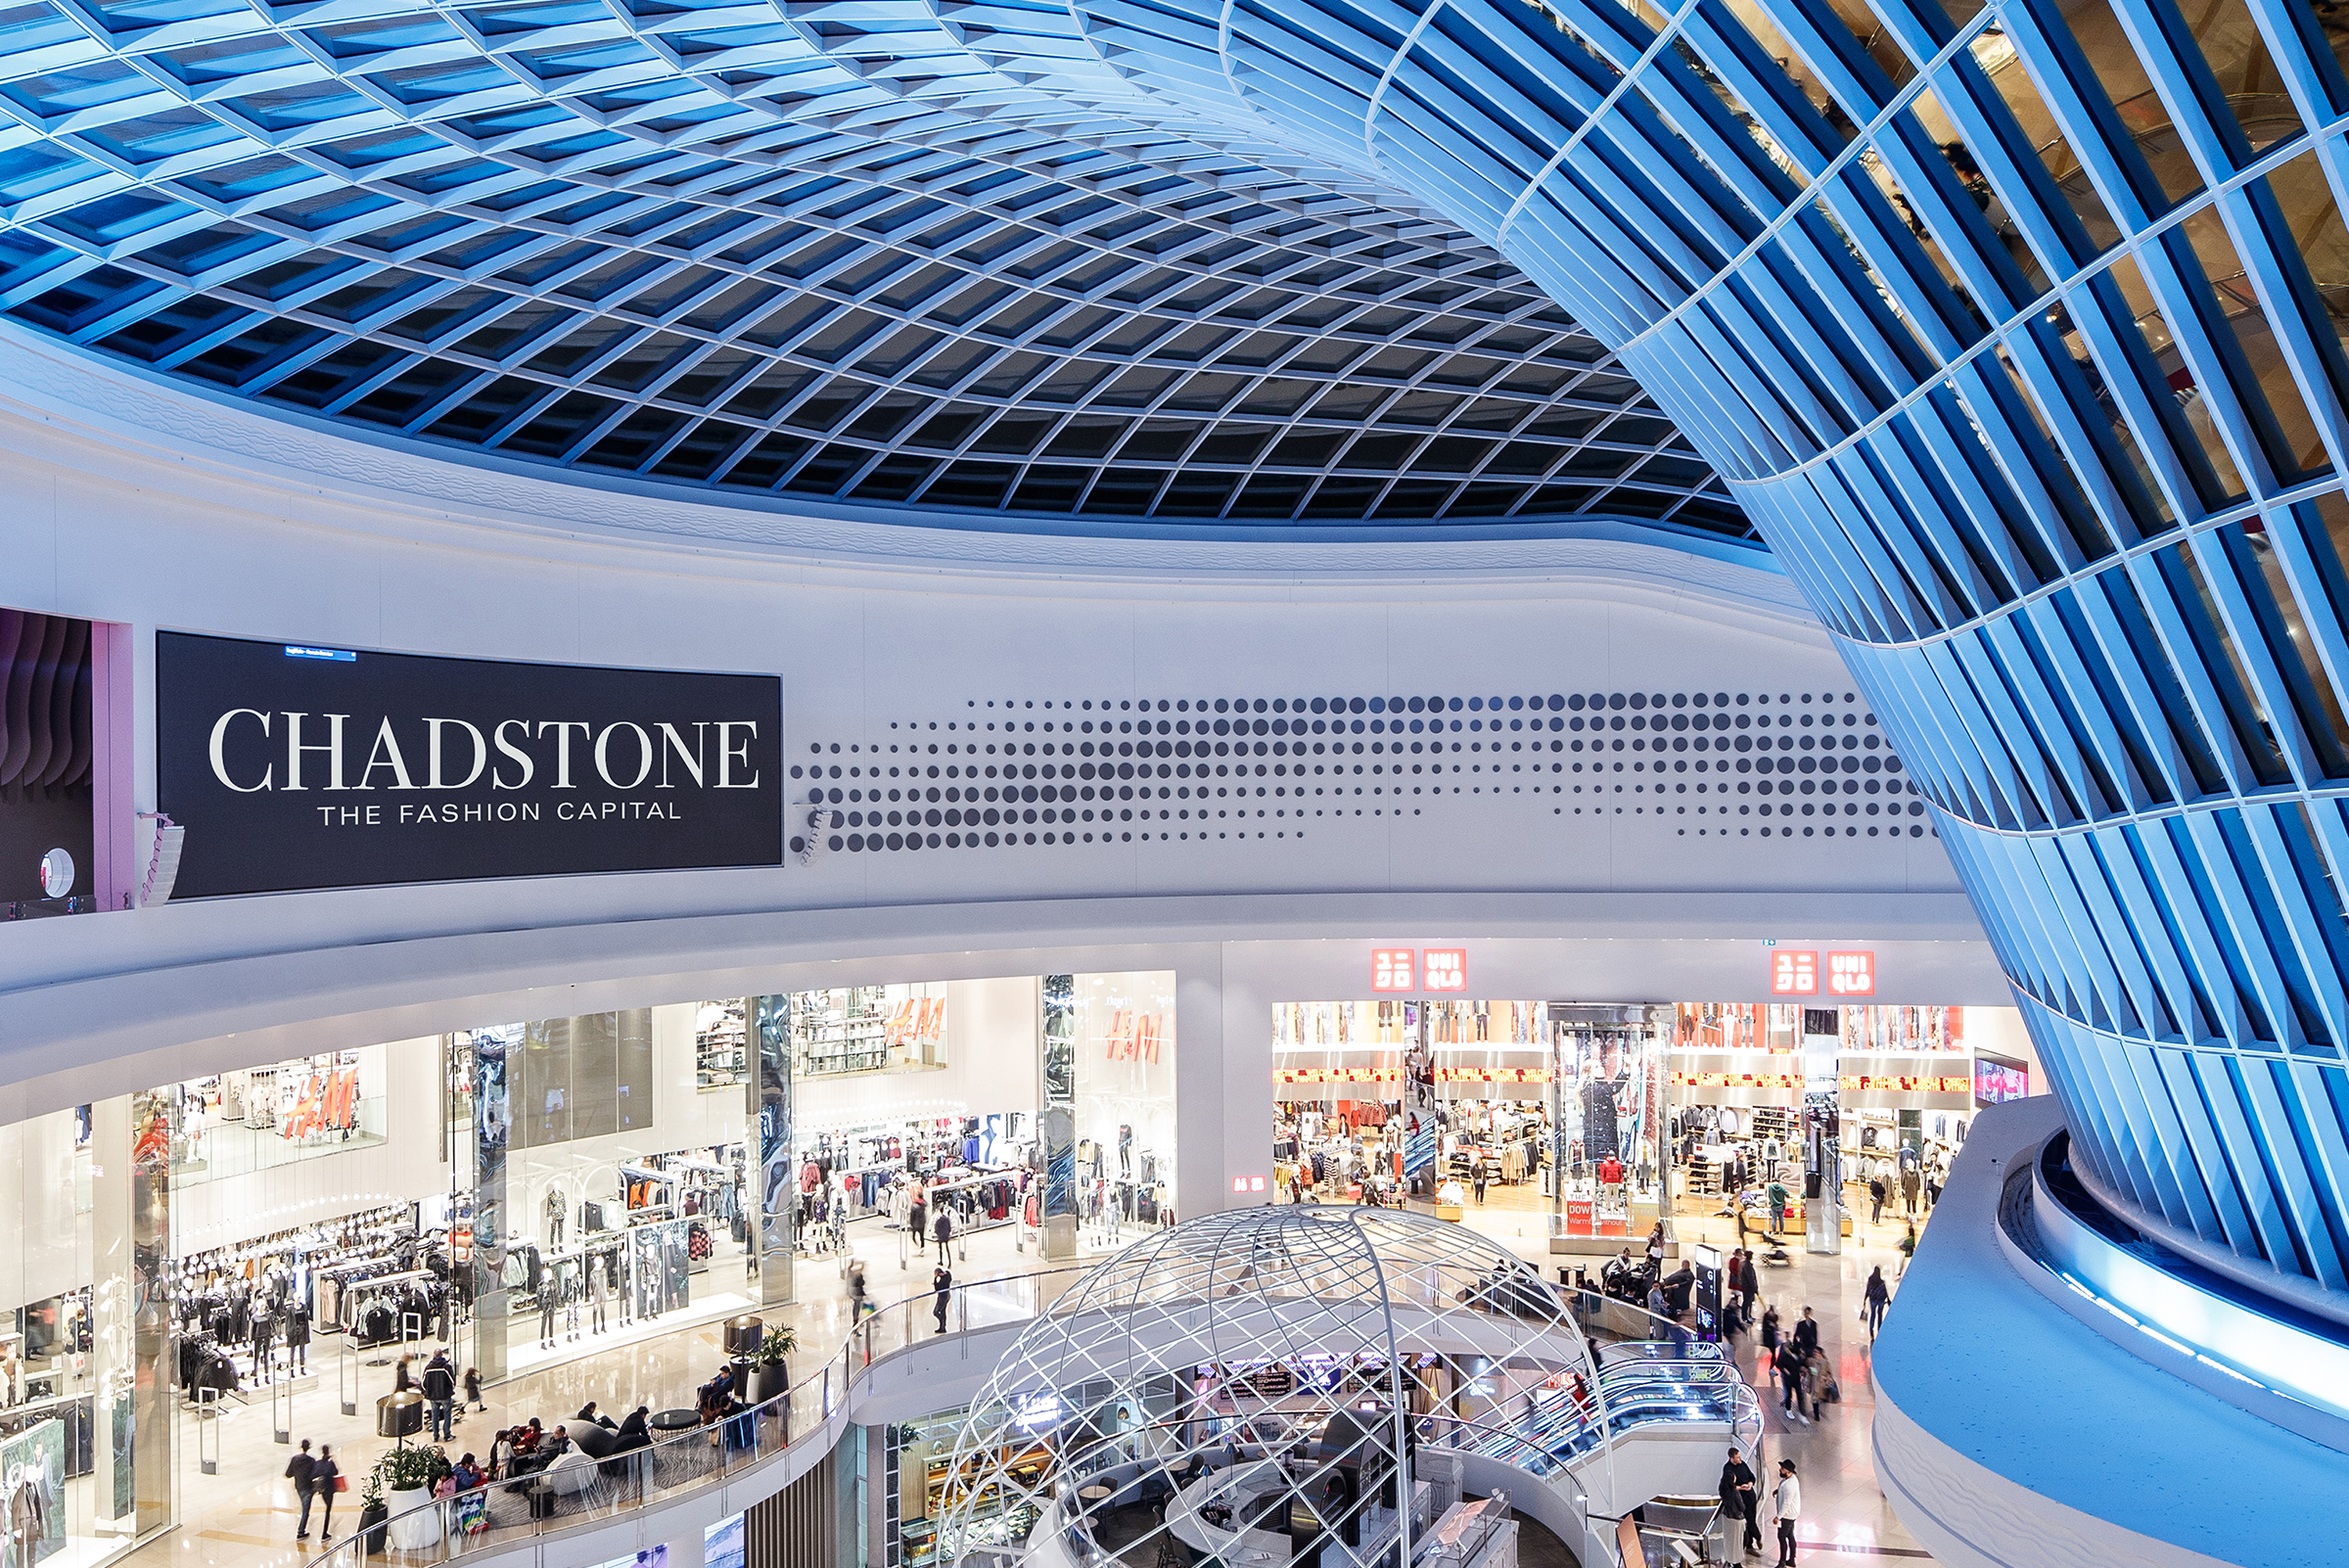 Chadstone Shopping Centre කොවිඩ් අවධානම් ස්ථාන අතරට